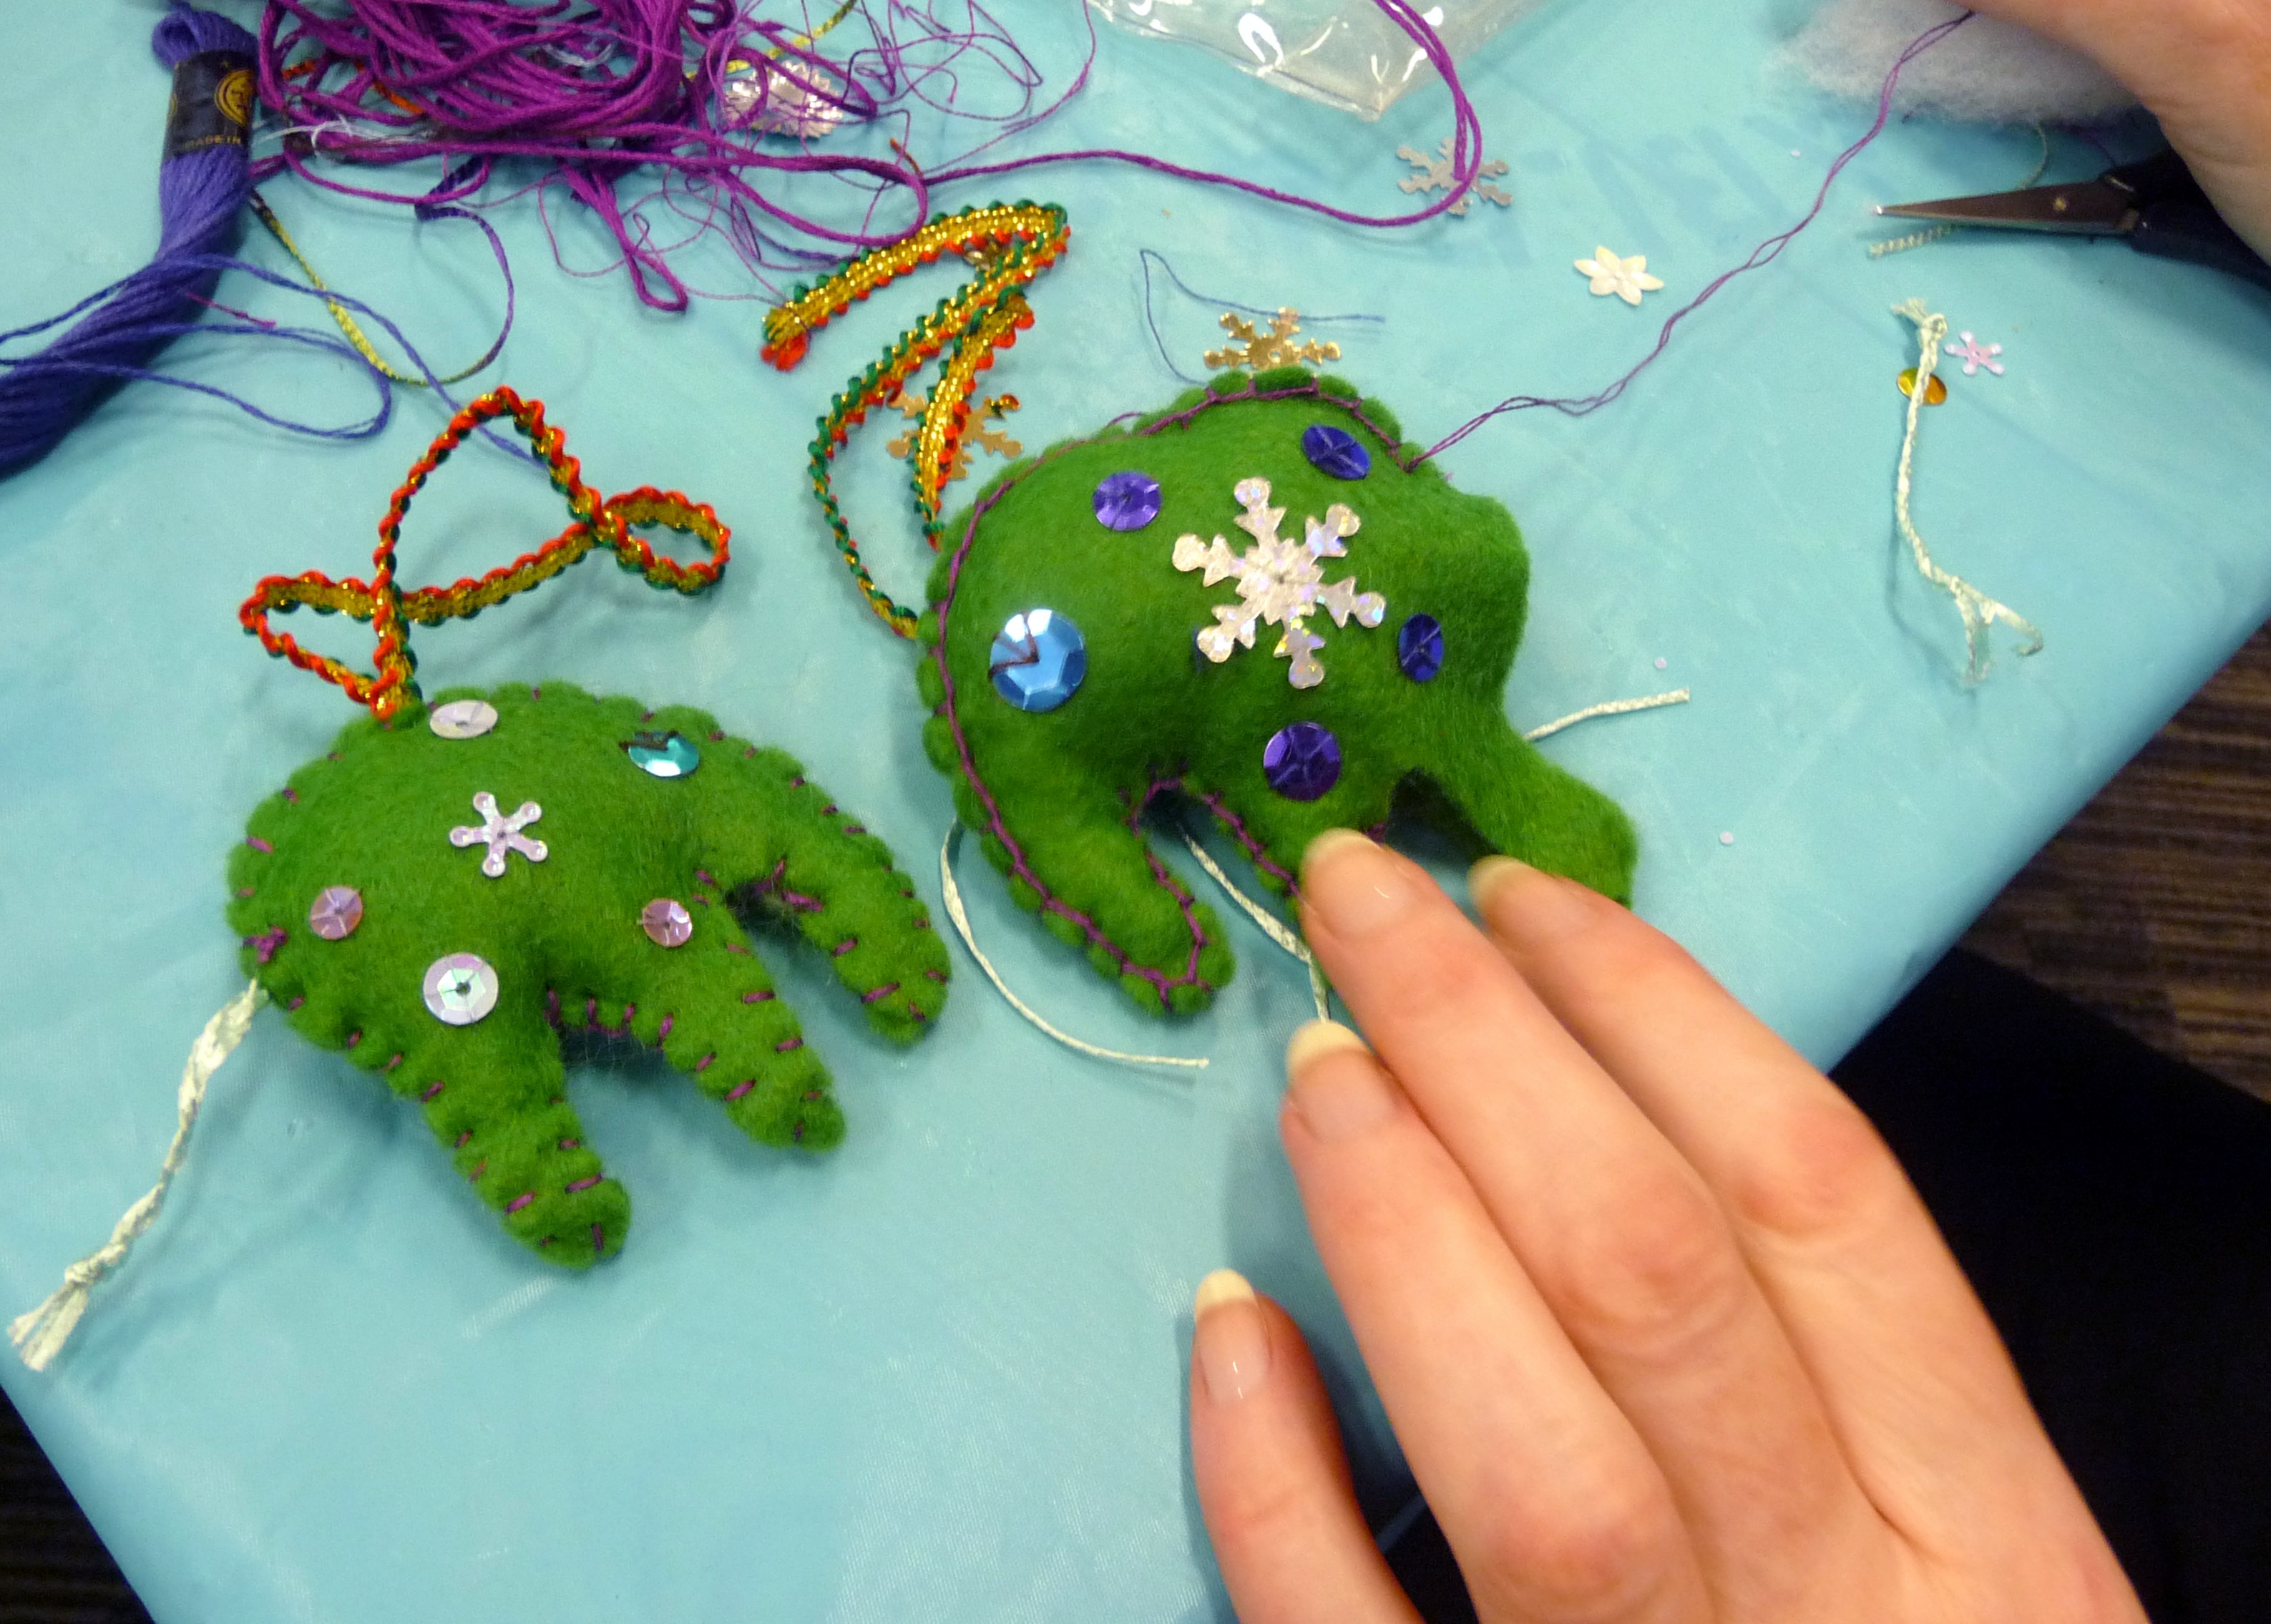 MEG ran a workshop making embroidered elephants at MAKEFEST in Liverpool Central Library, June 2015